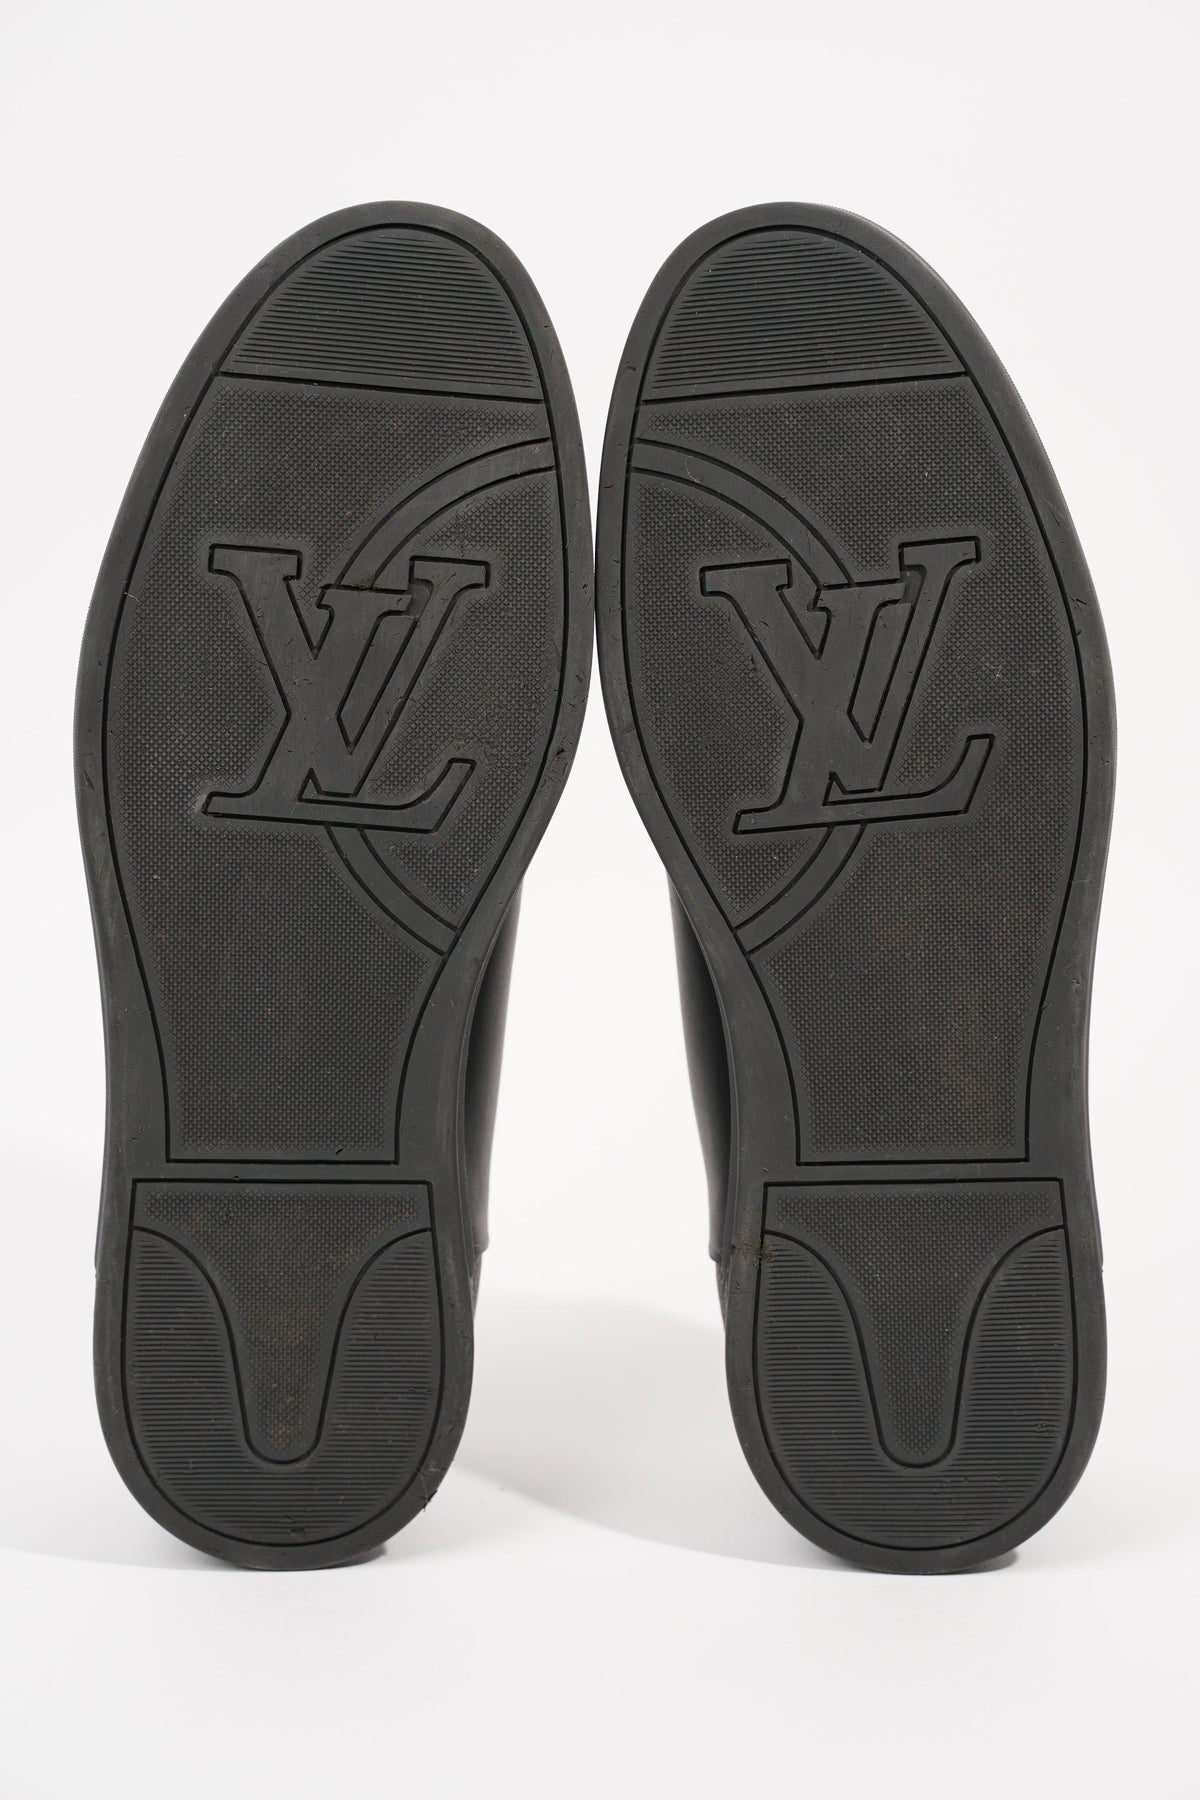 LOUIS VUITTON damier sneakers trainers UK10.5 / US11.5 /44.5 shoes